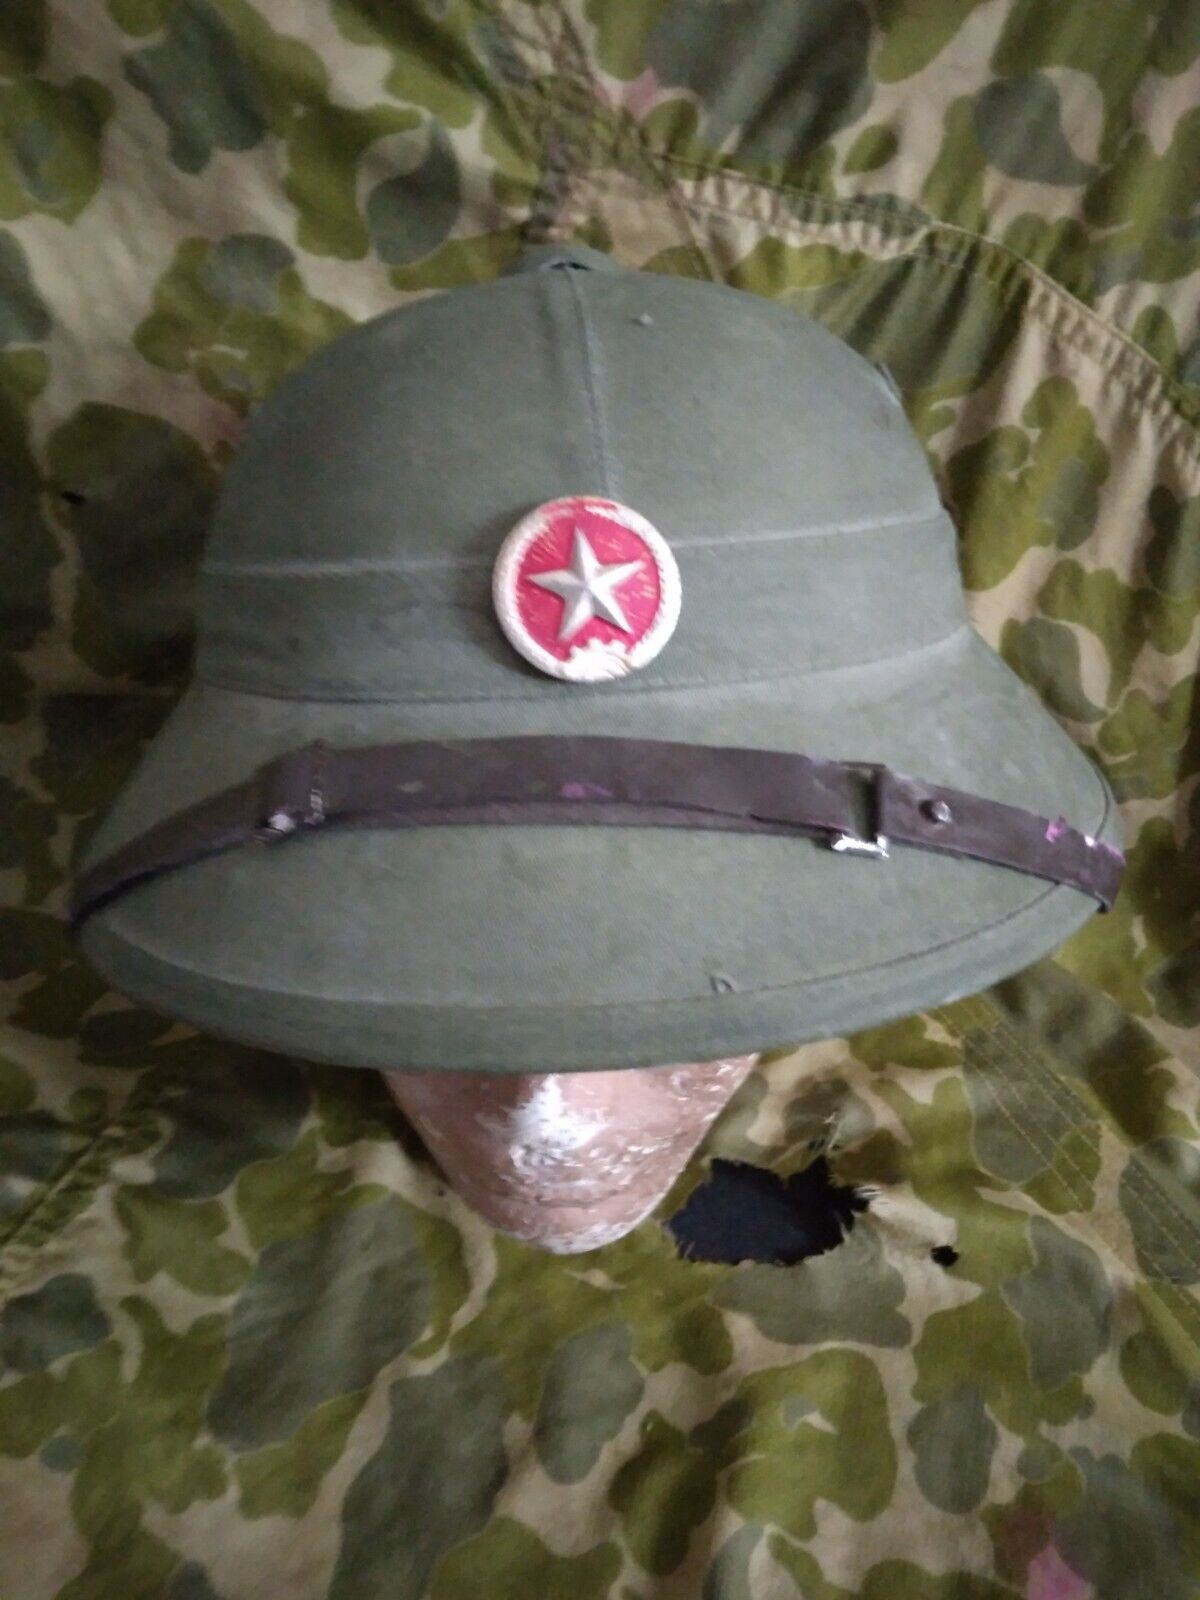 Vietnam War NVA helmet for North Vietnam Army Soldier with helmet badge